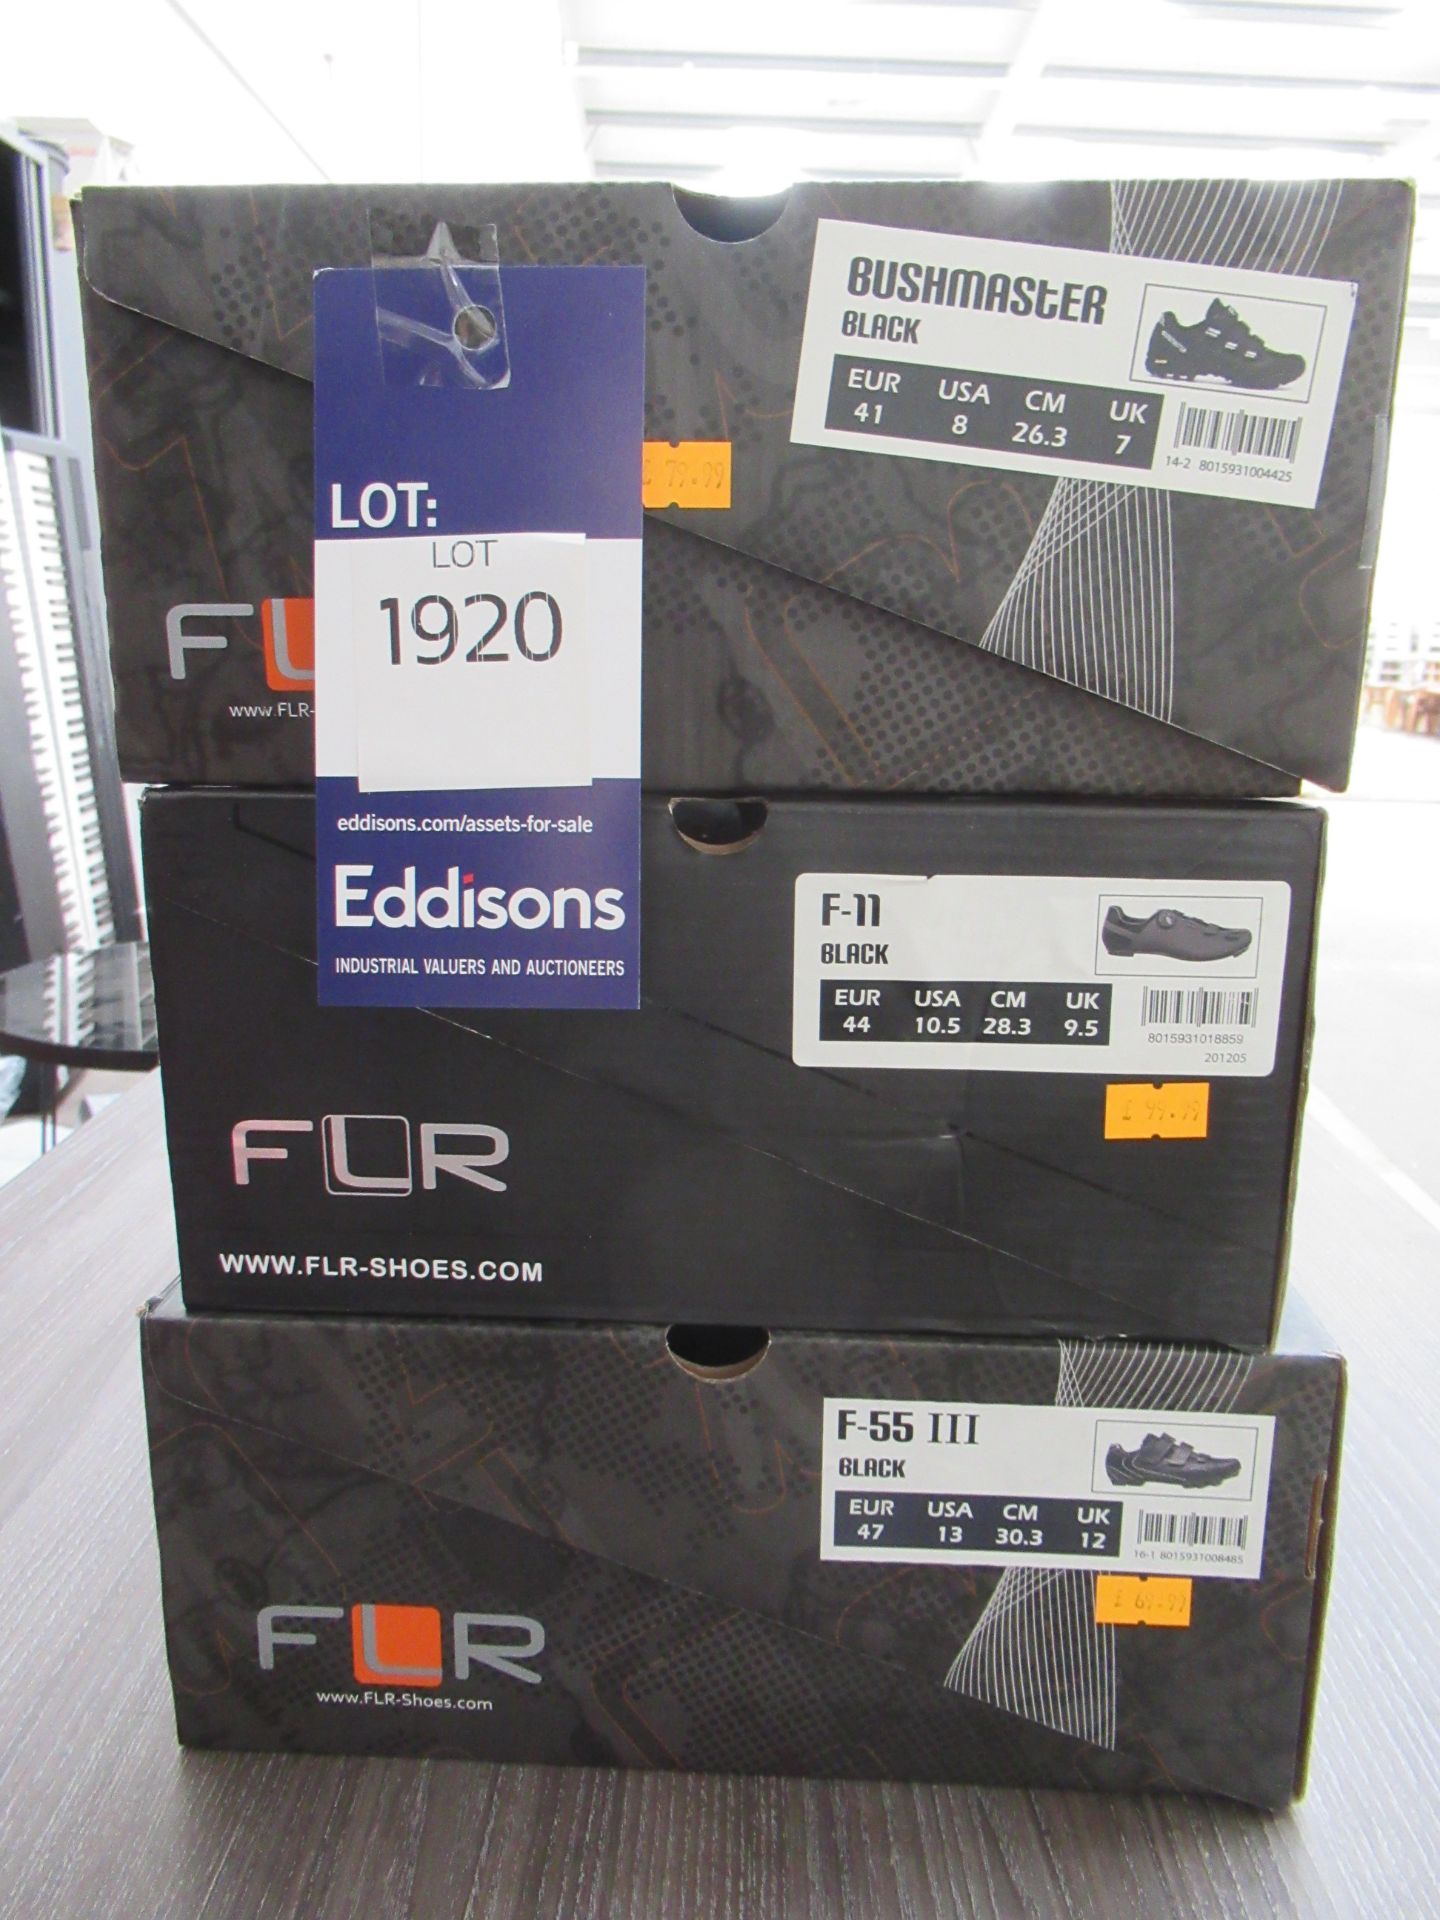 3 x Pairs of FLR cycling shoes - 1 x Bushmaster boxed EU size 41 (RRP£79.99); 1 x F-11 boxed EU size